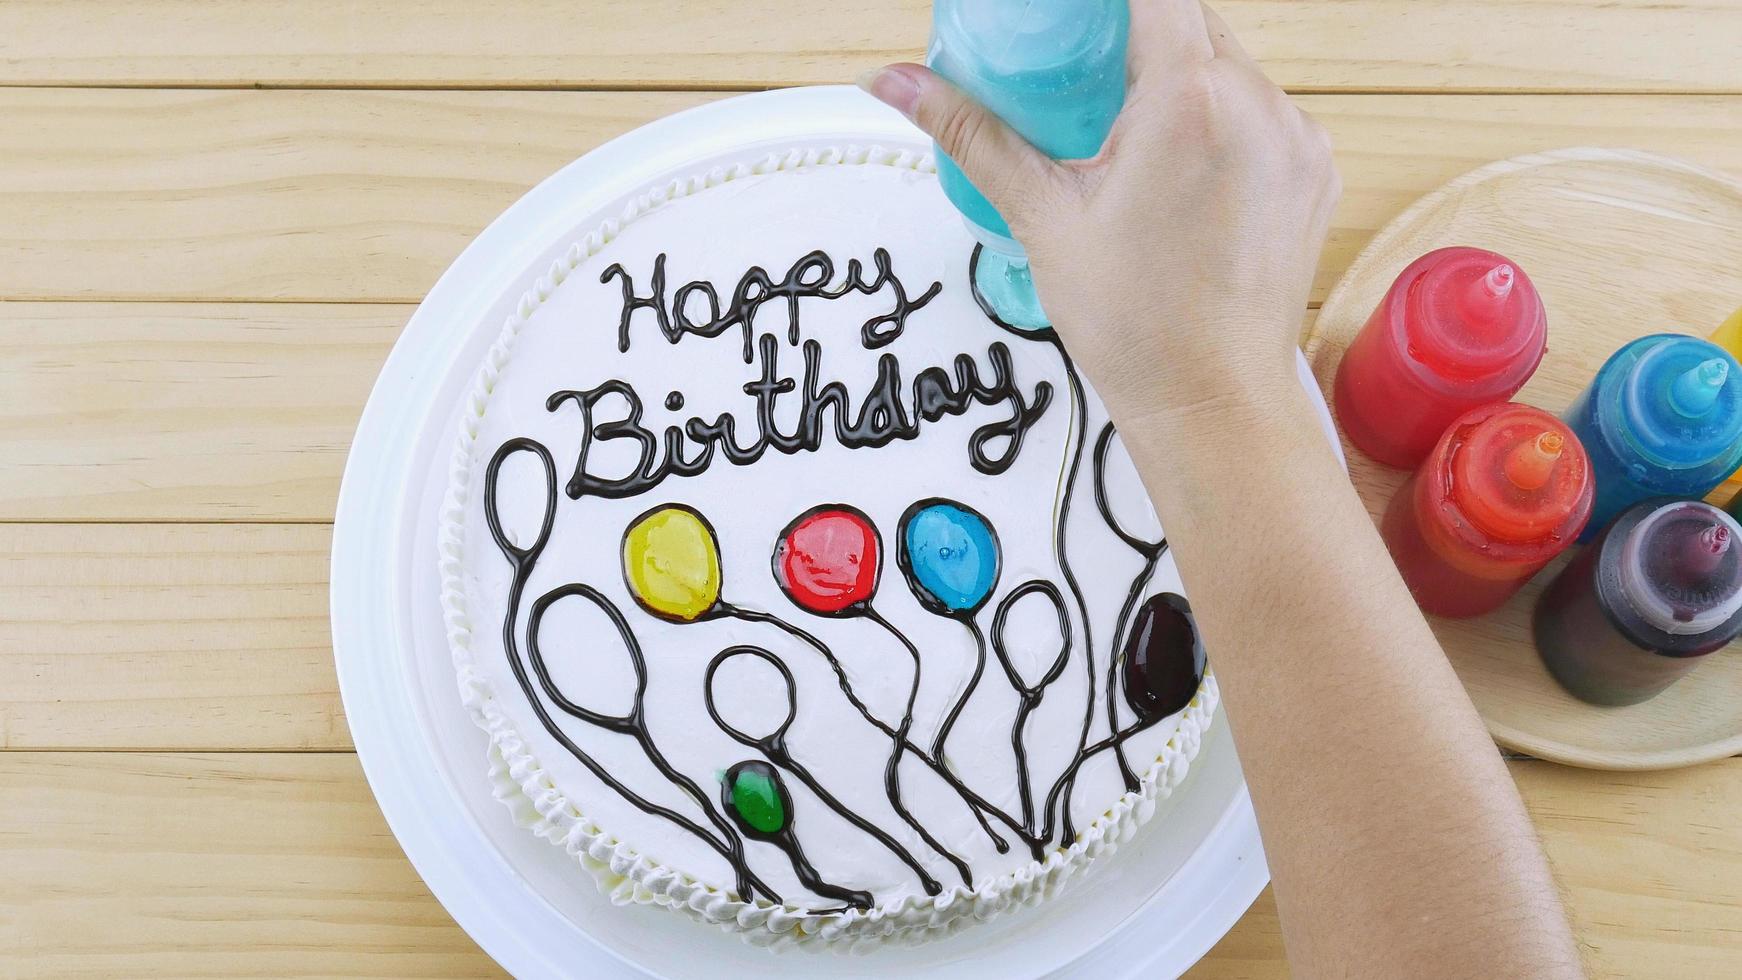 Birthday cake decoration using green yam making a colorful balloon photo